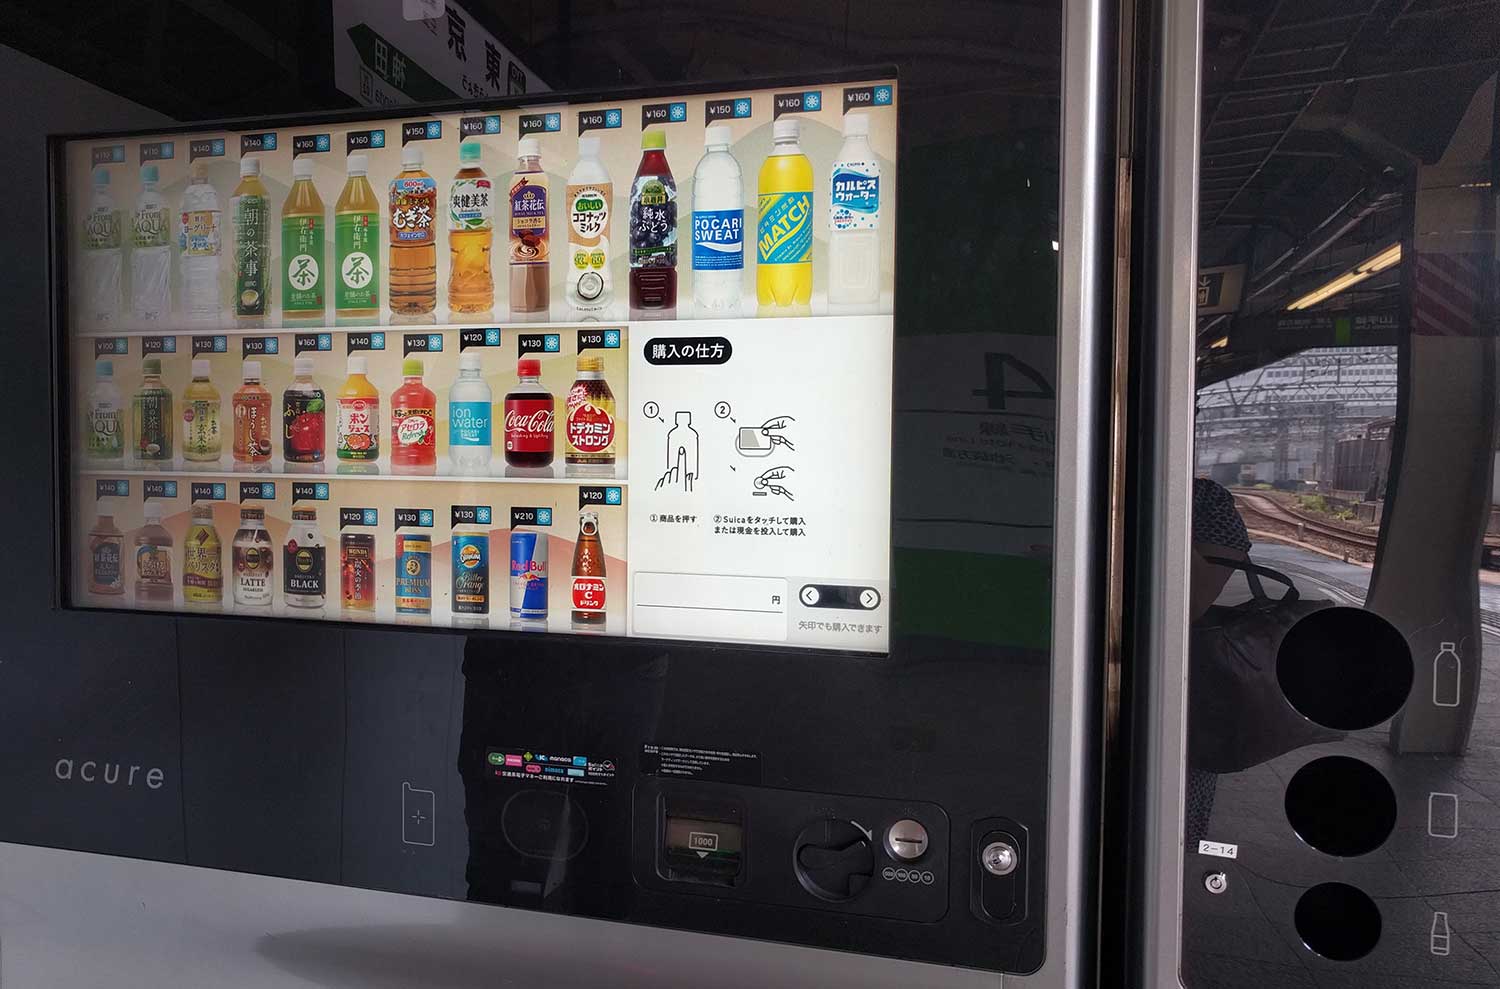 Touch-screen vending machine